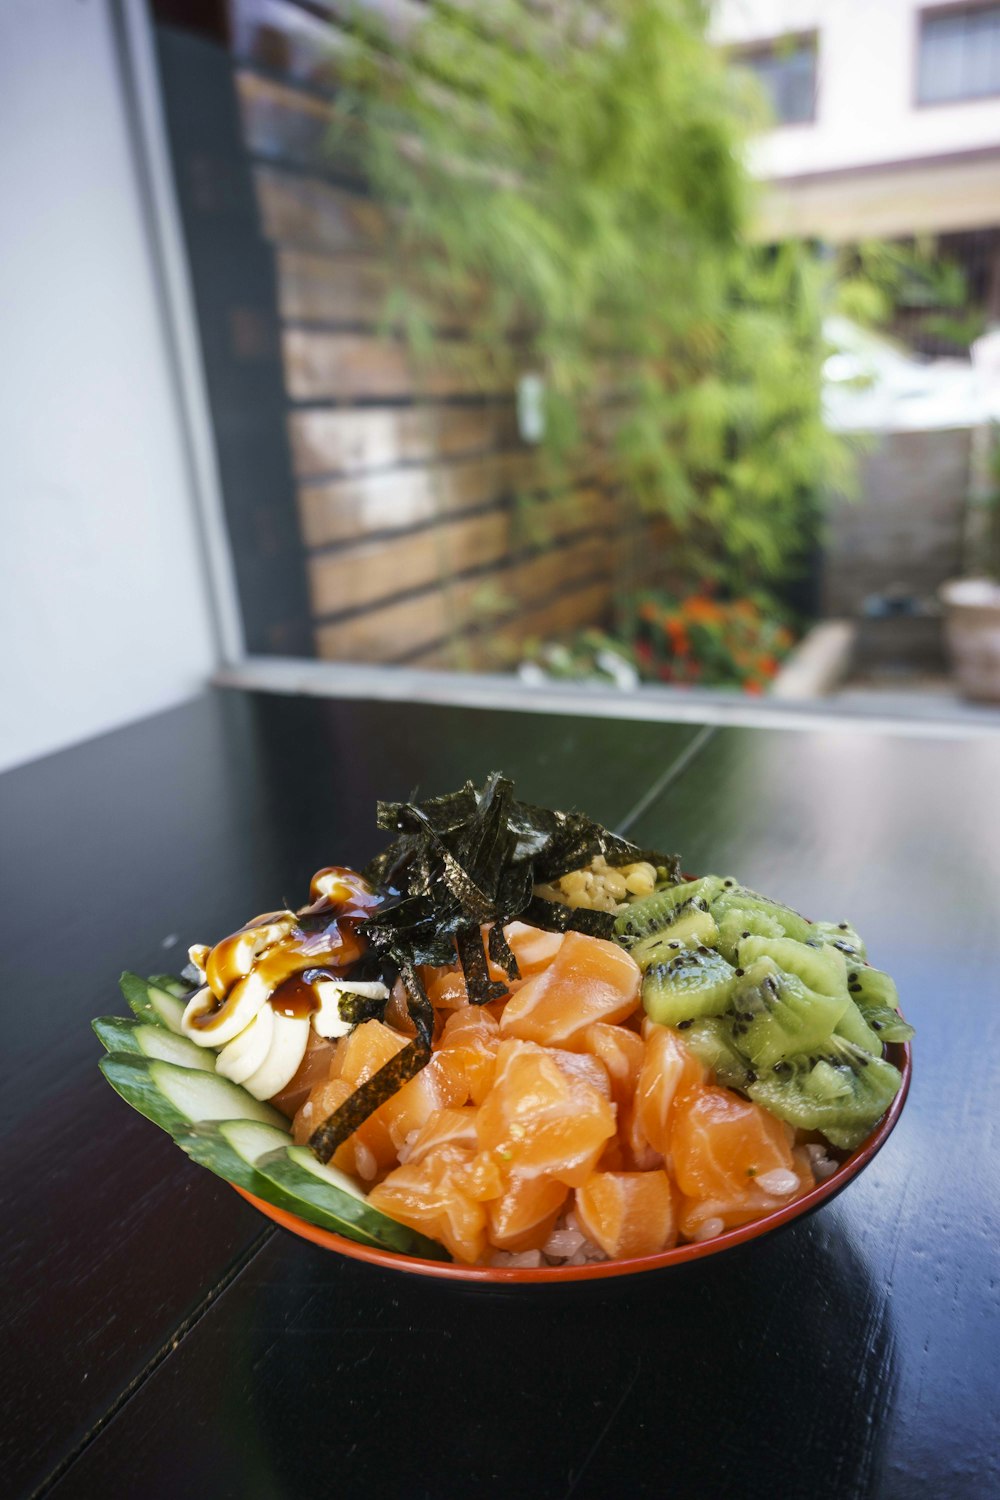 kiwi, cucumber, fish meat, banana, and nori salad on plate